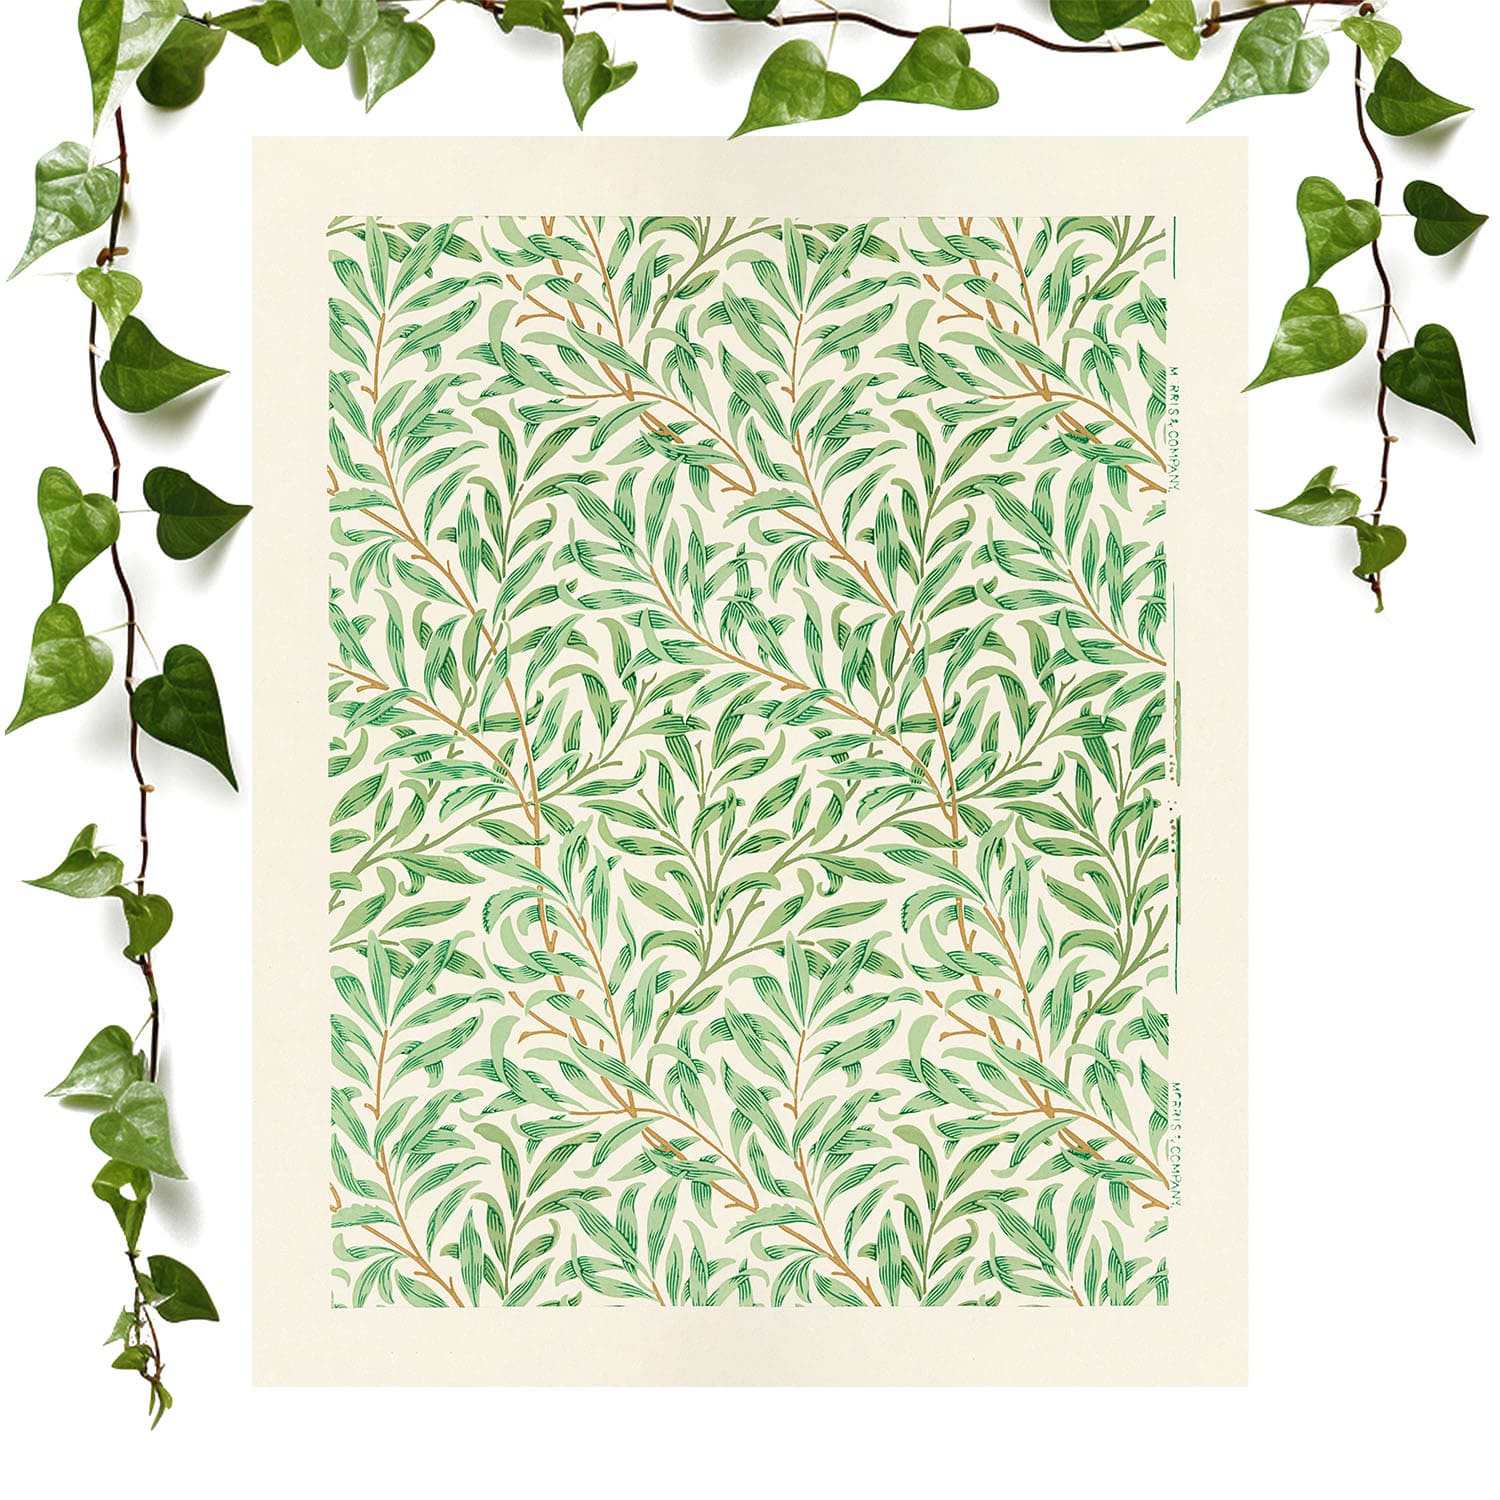 William Morris Green Leaf Pattern art print featuring plants, vintage wall art room decor